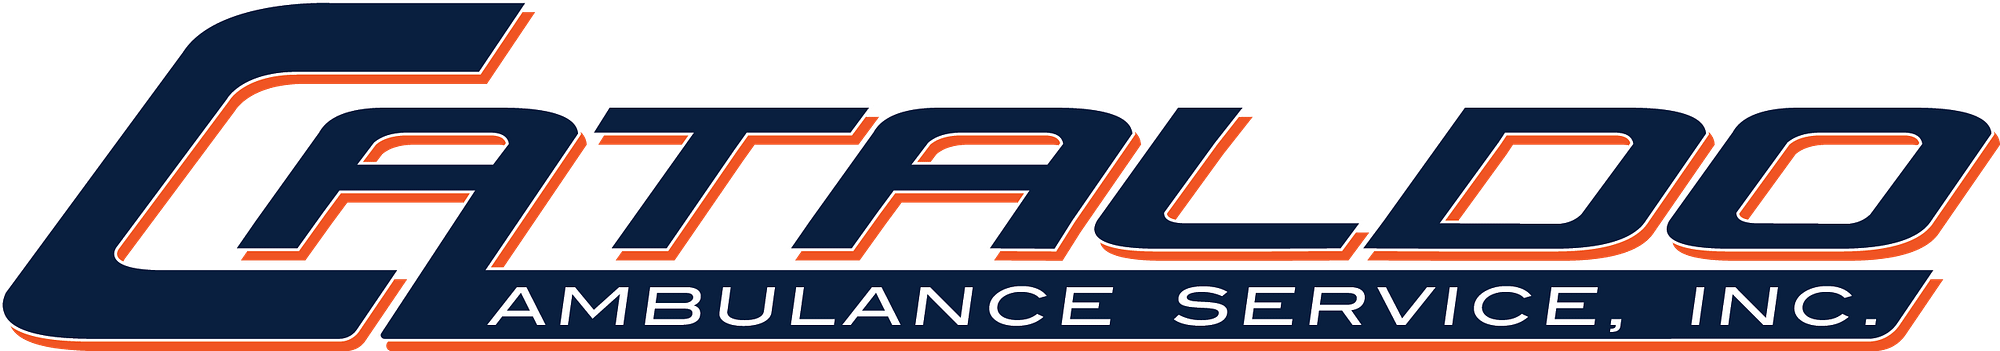 Cataldo Ambulance Service, Inc. Logo in blue, white and orange